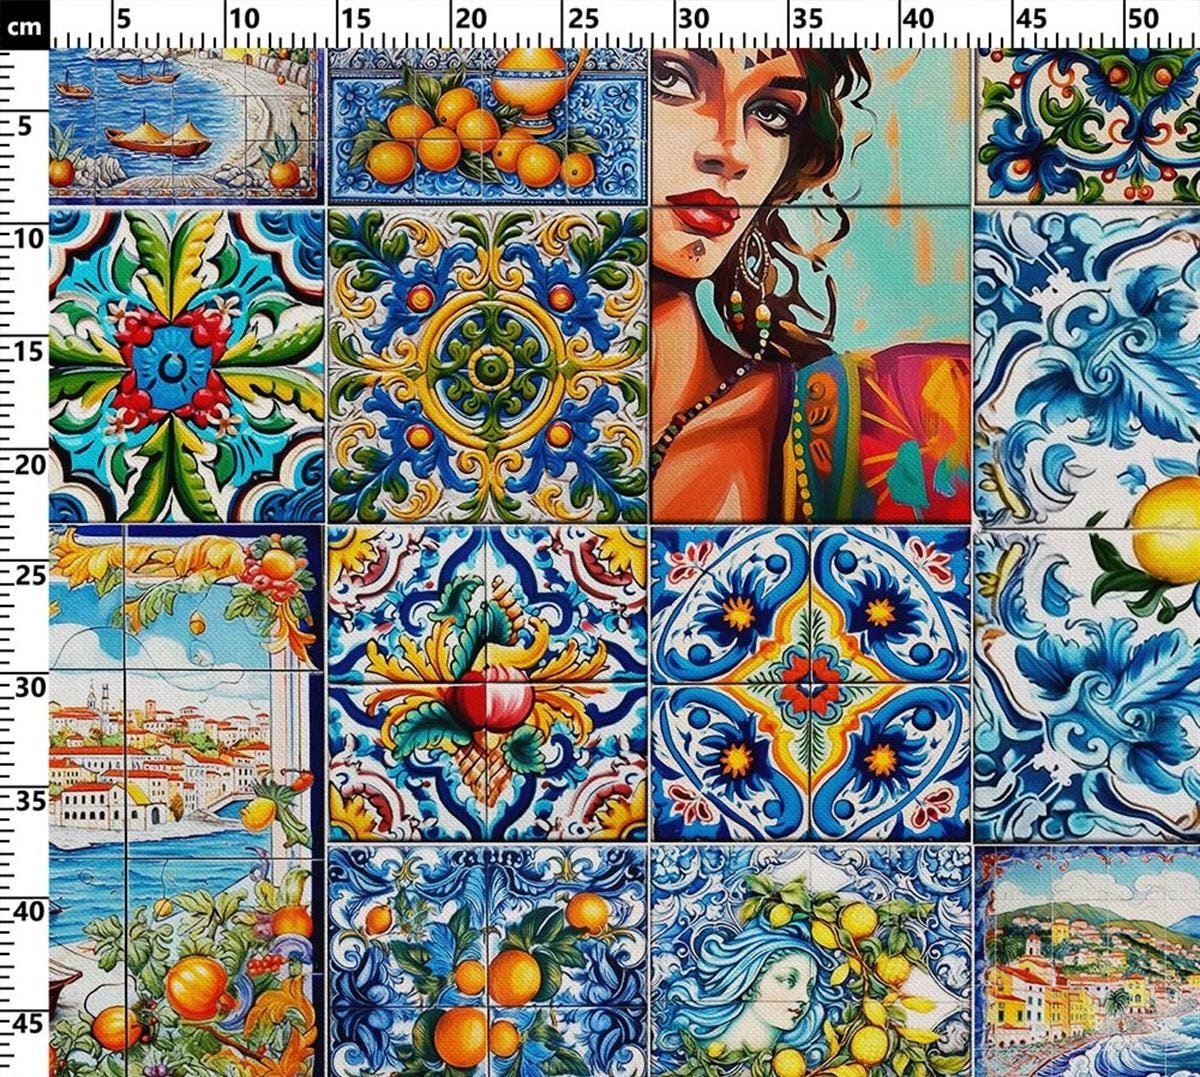 Lanyani Broken Ceramic Porcelain Tiles for Mosaic Crafts Glazed Irregular  Blue and White China Plate Mosaic Tiles, 11x11 Inch 